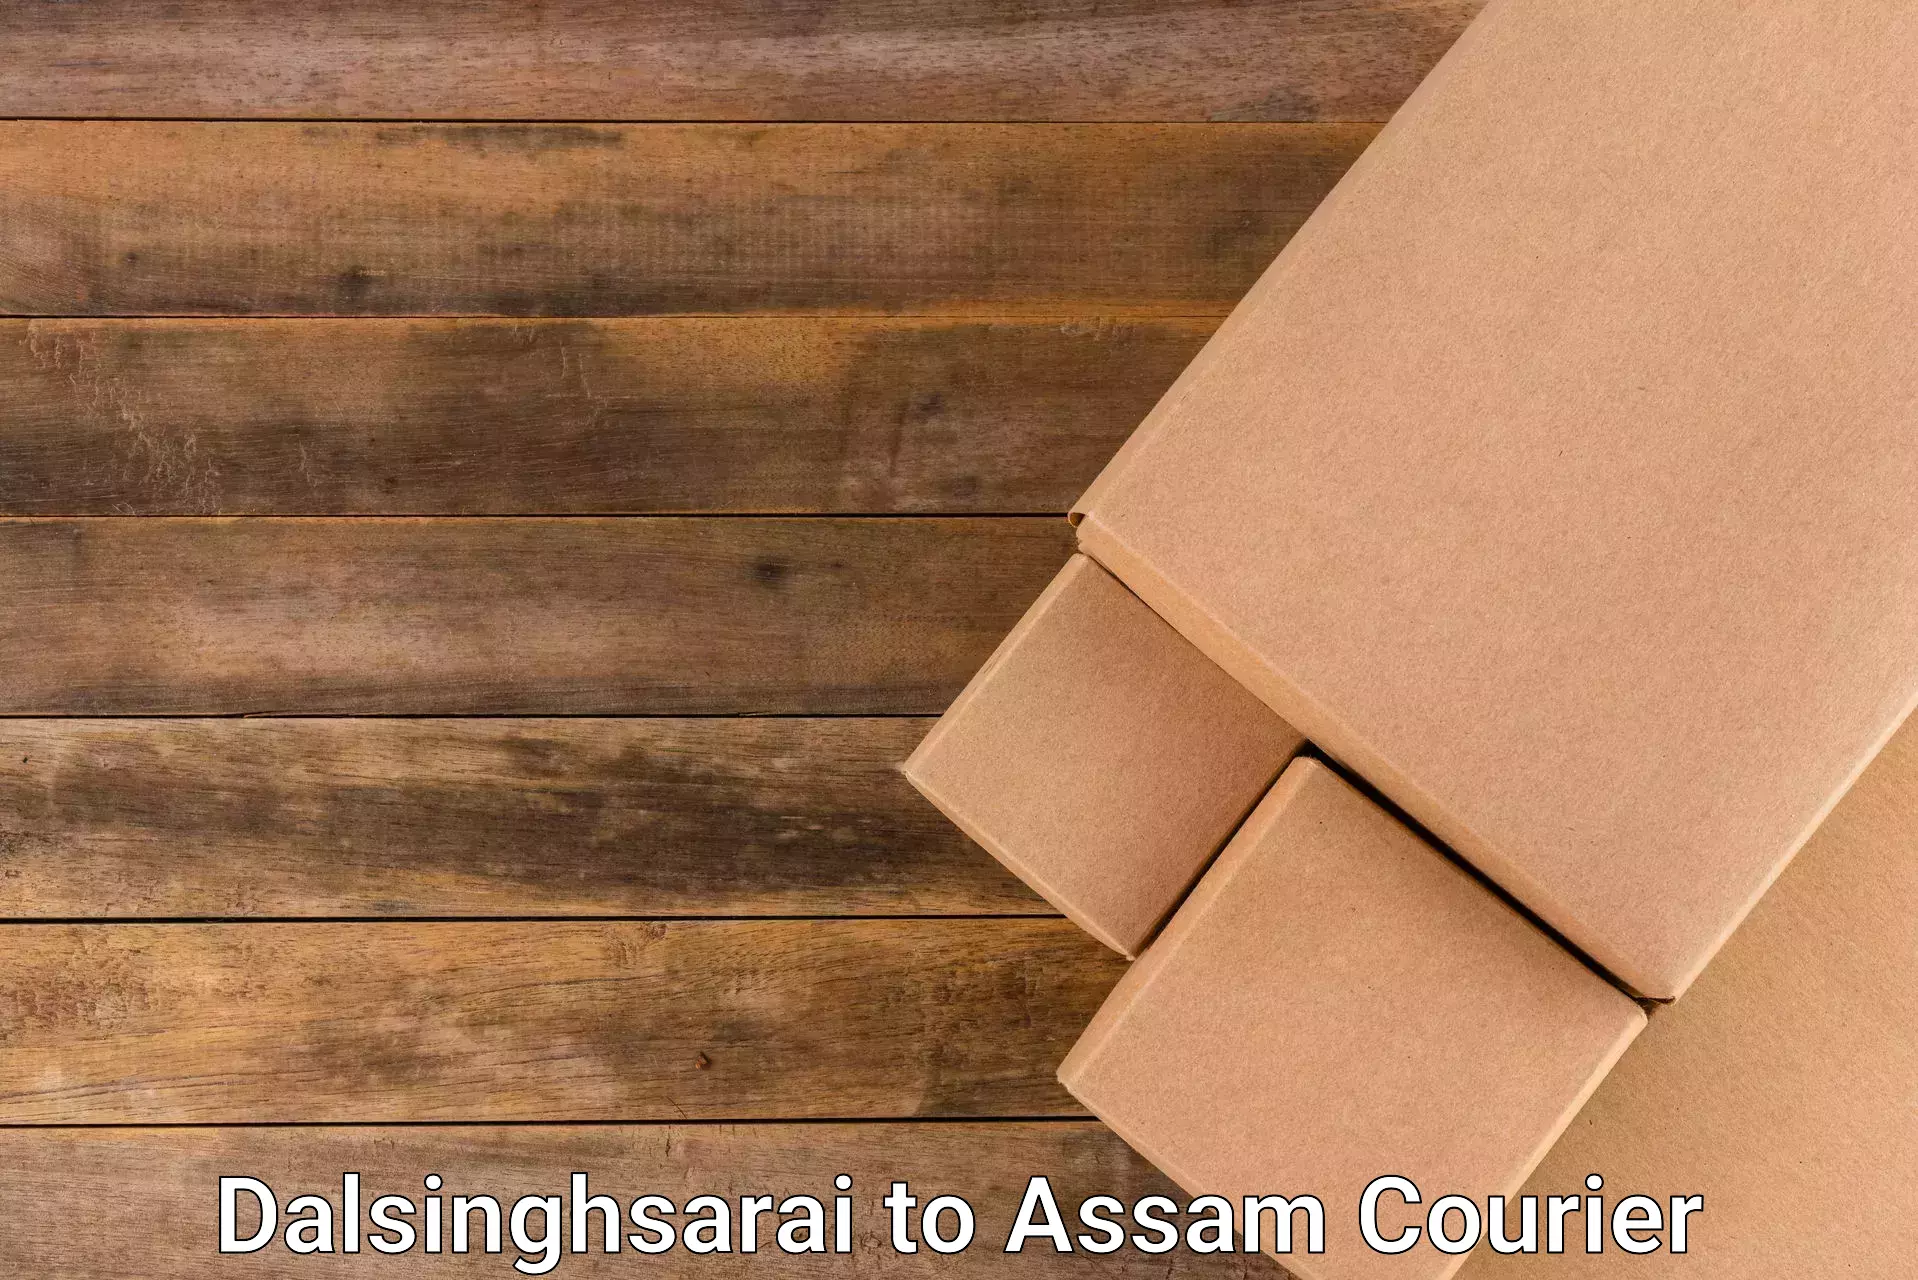 High-performance logistics Dalsinghsarai to Silapathar